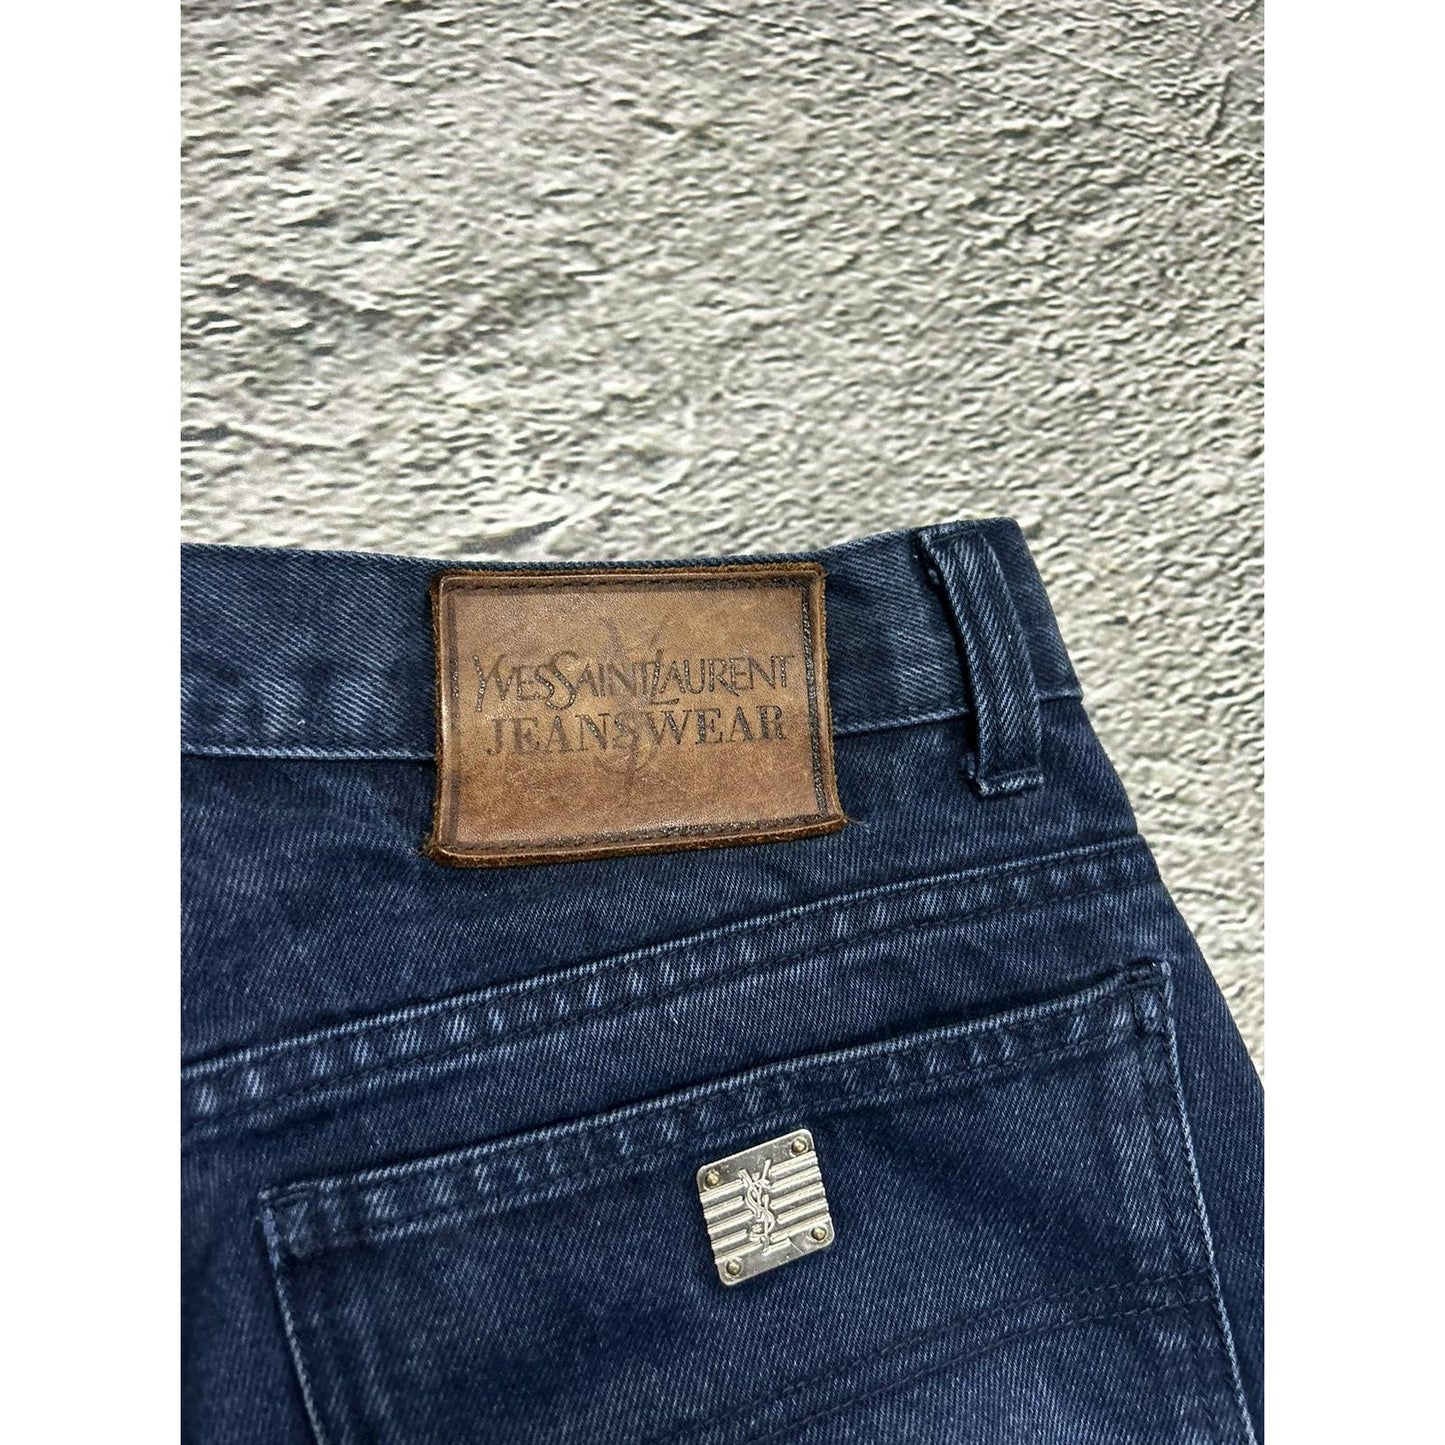 YSL vintage jeans navy Yves Saint Laurent 90s